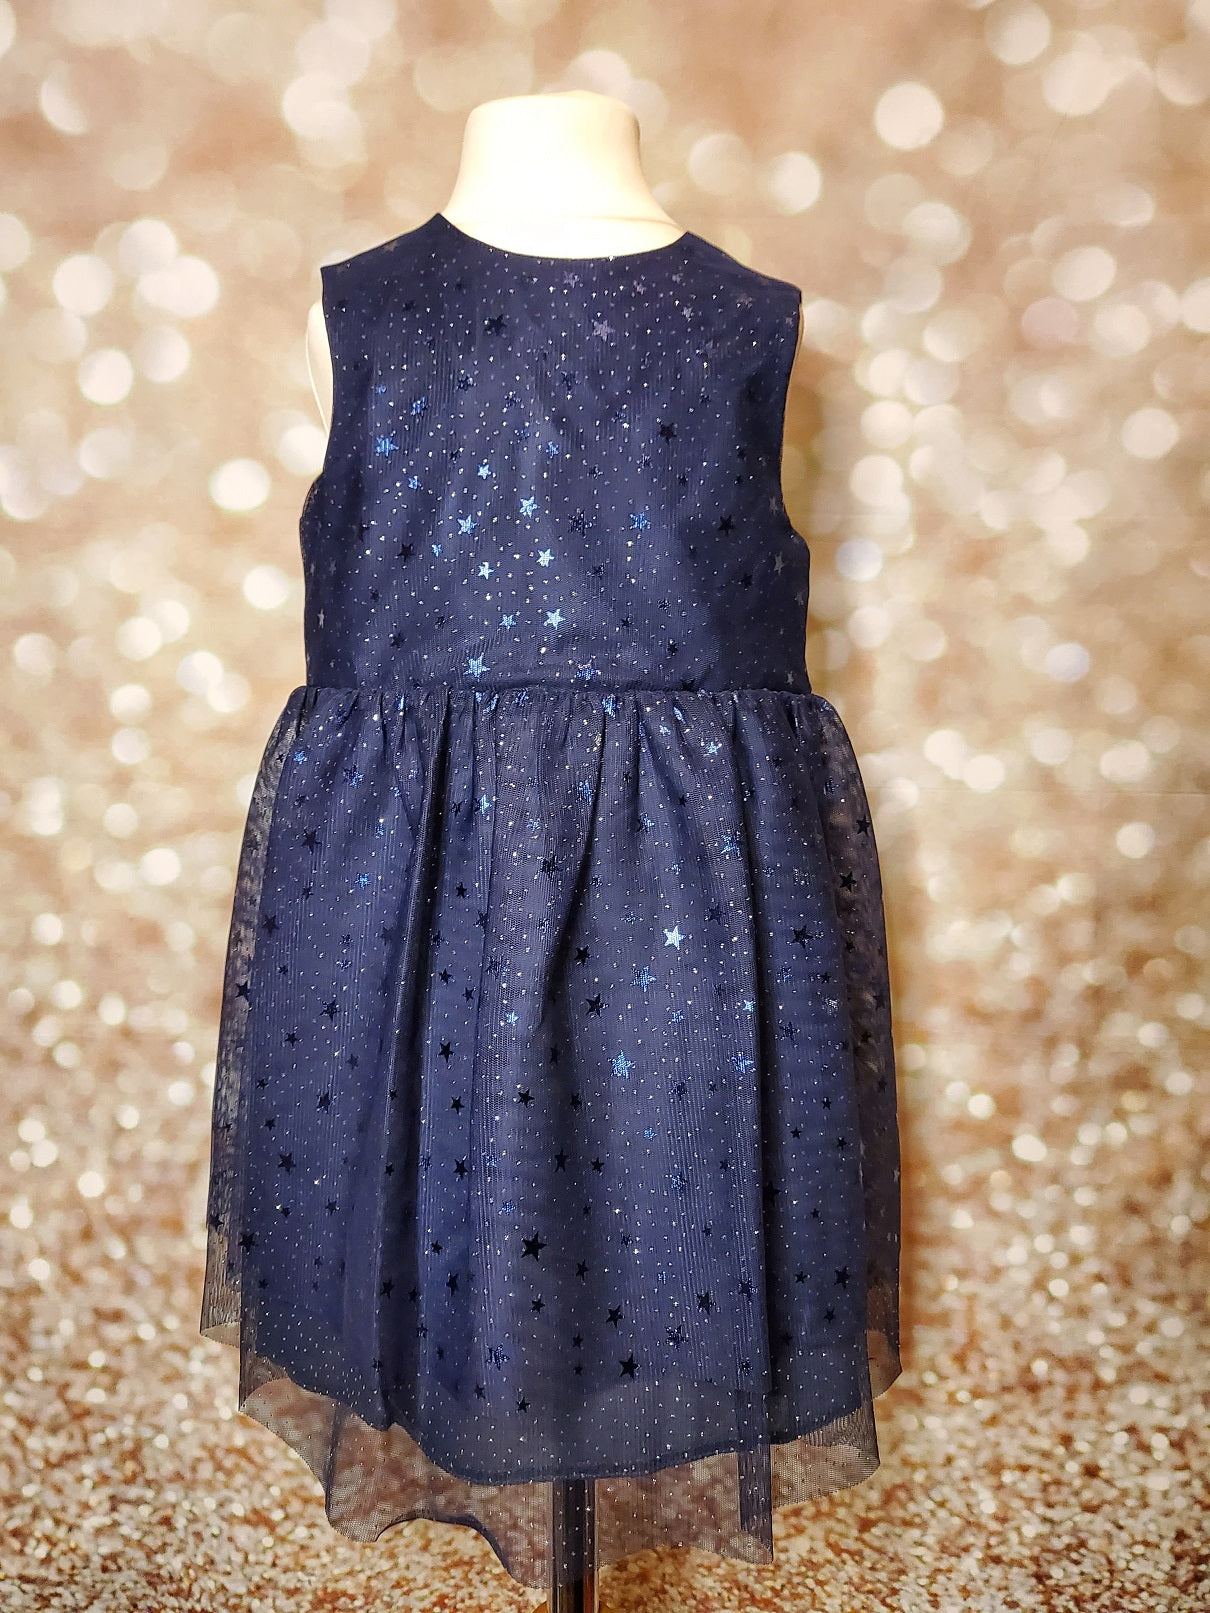 Star Sparkle Navy Midnight Blue Dress